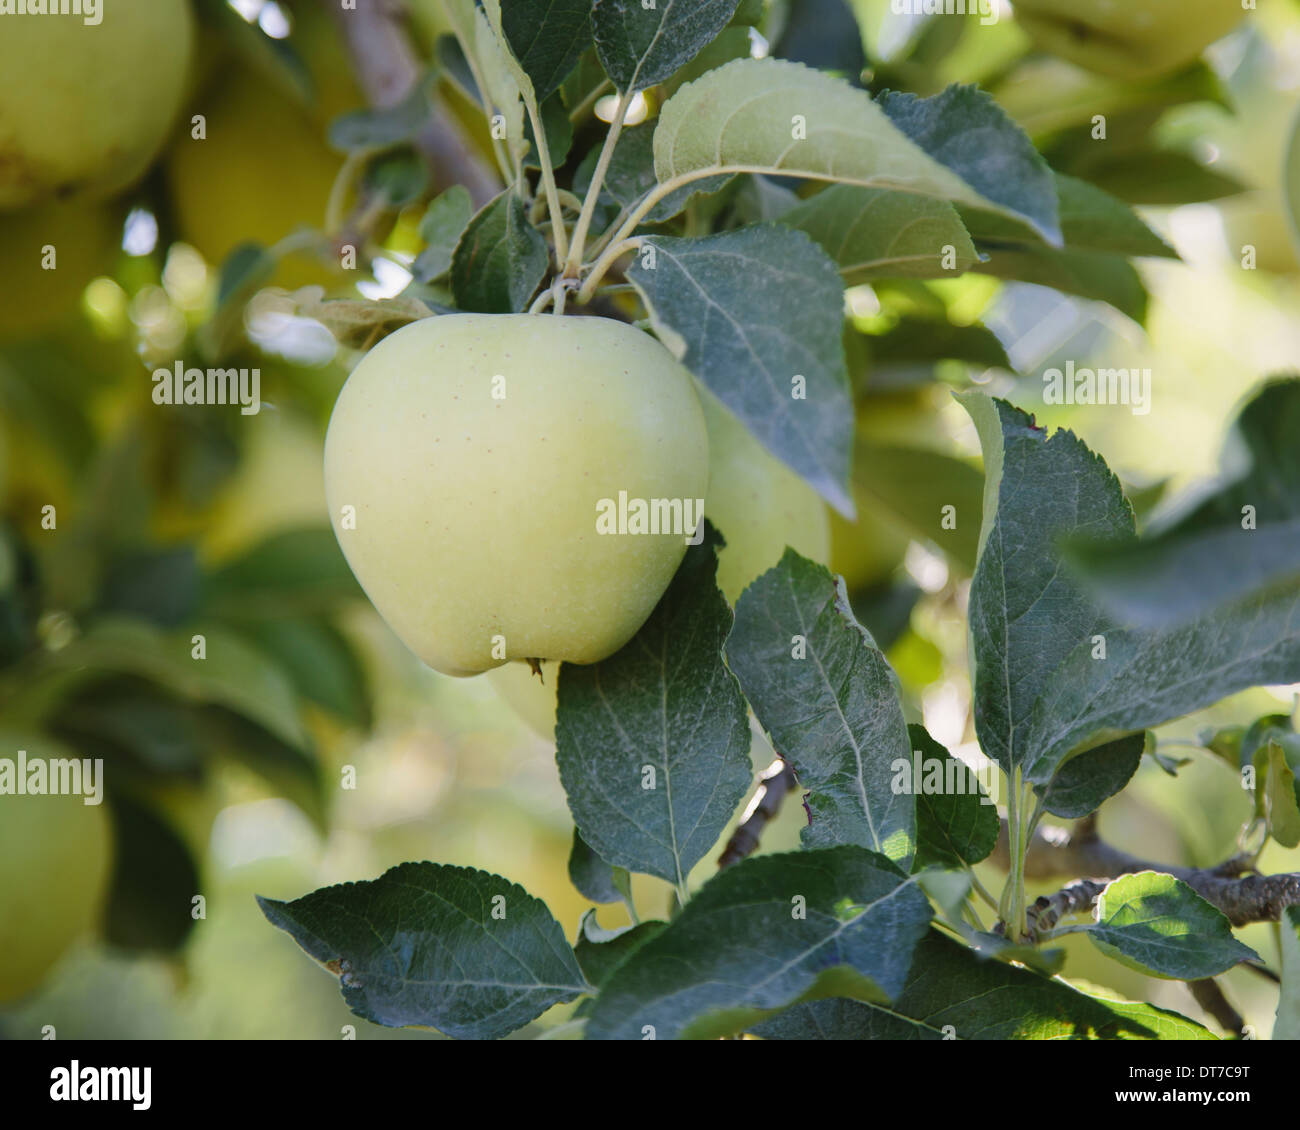 A ripe Golden Delicious apple on the tree close up Chelan County Washington USA Stock Photo